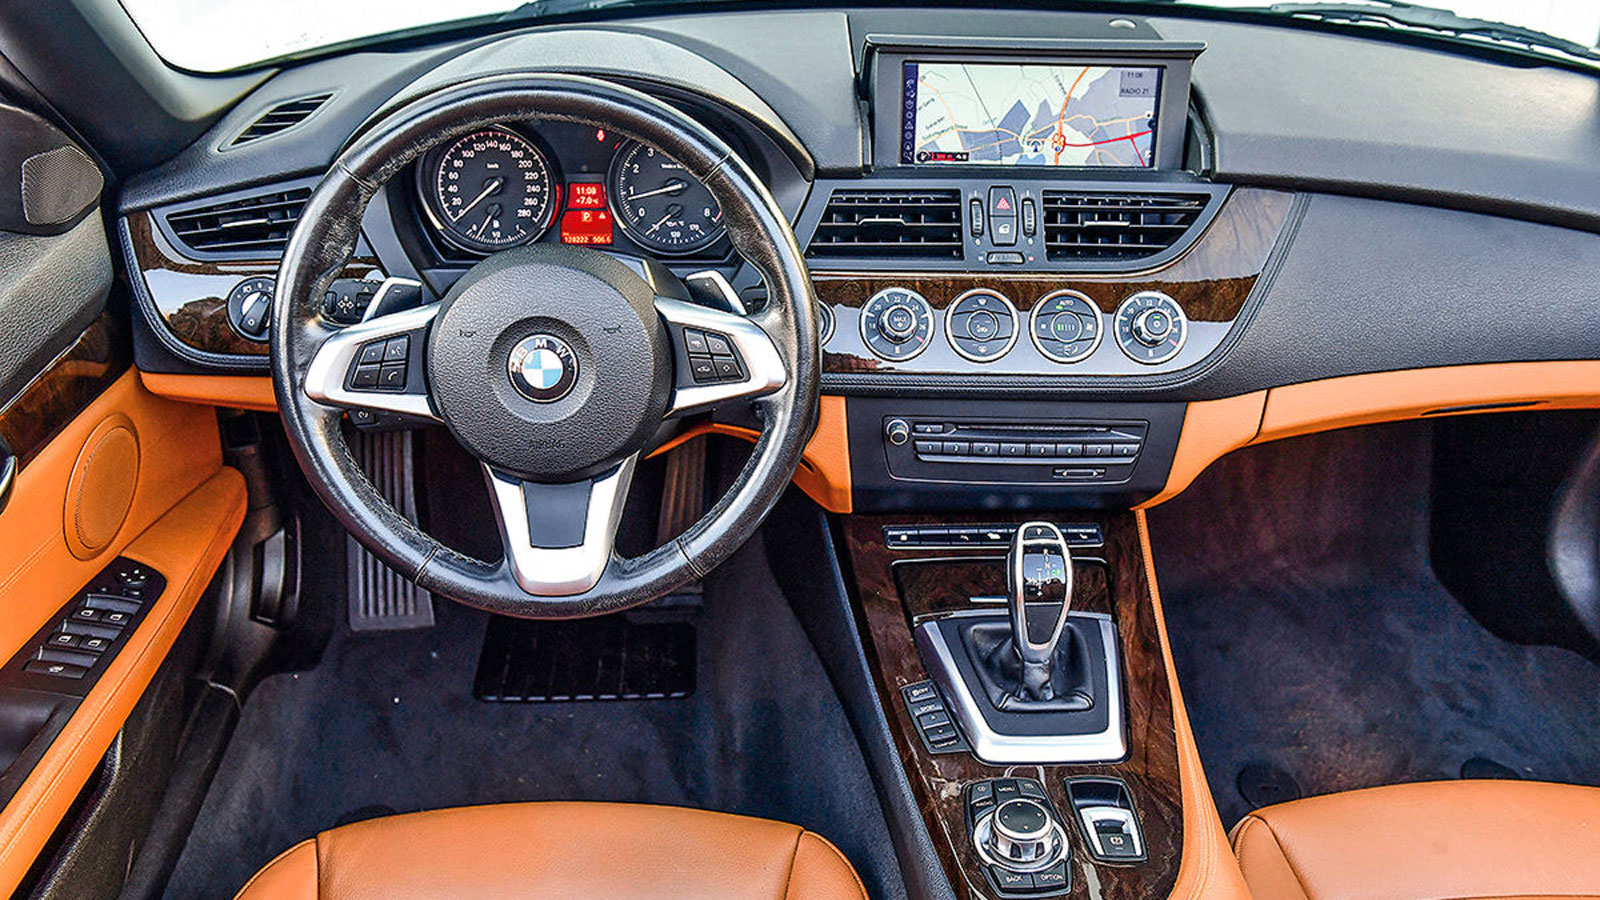 Test μεταχειρισμένου: BMW Z4 E89 με 128.300km 